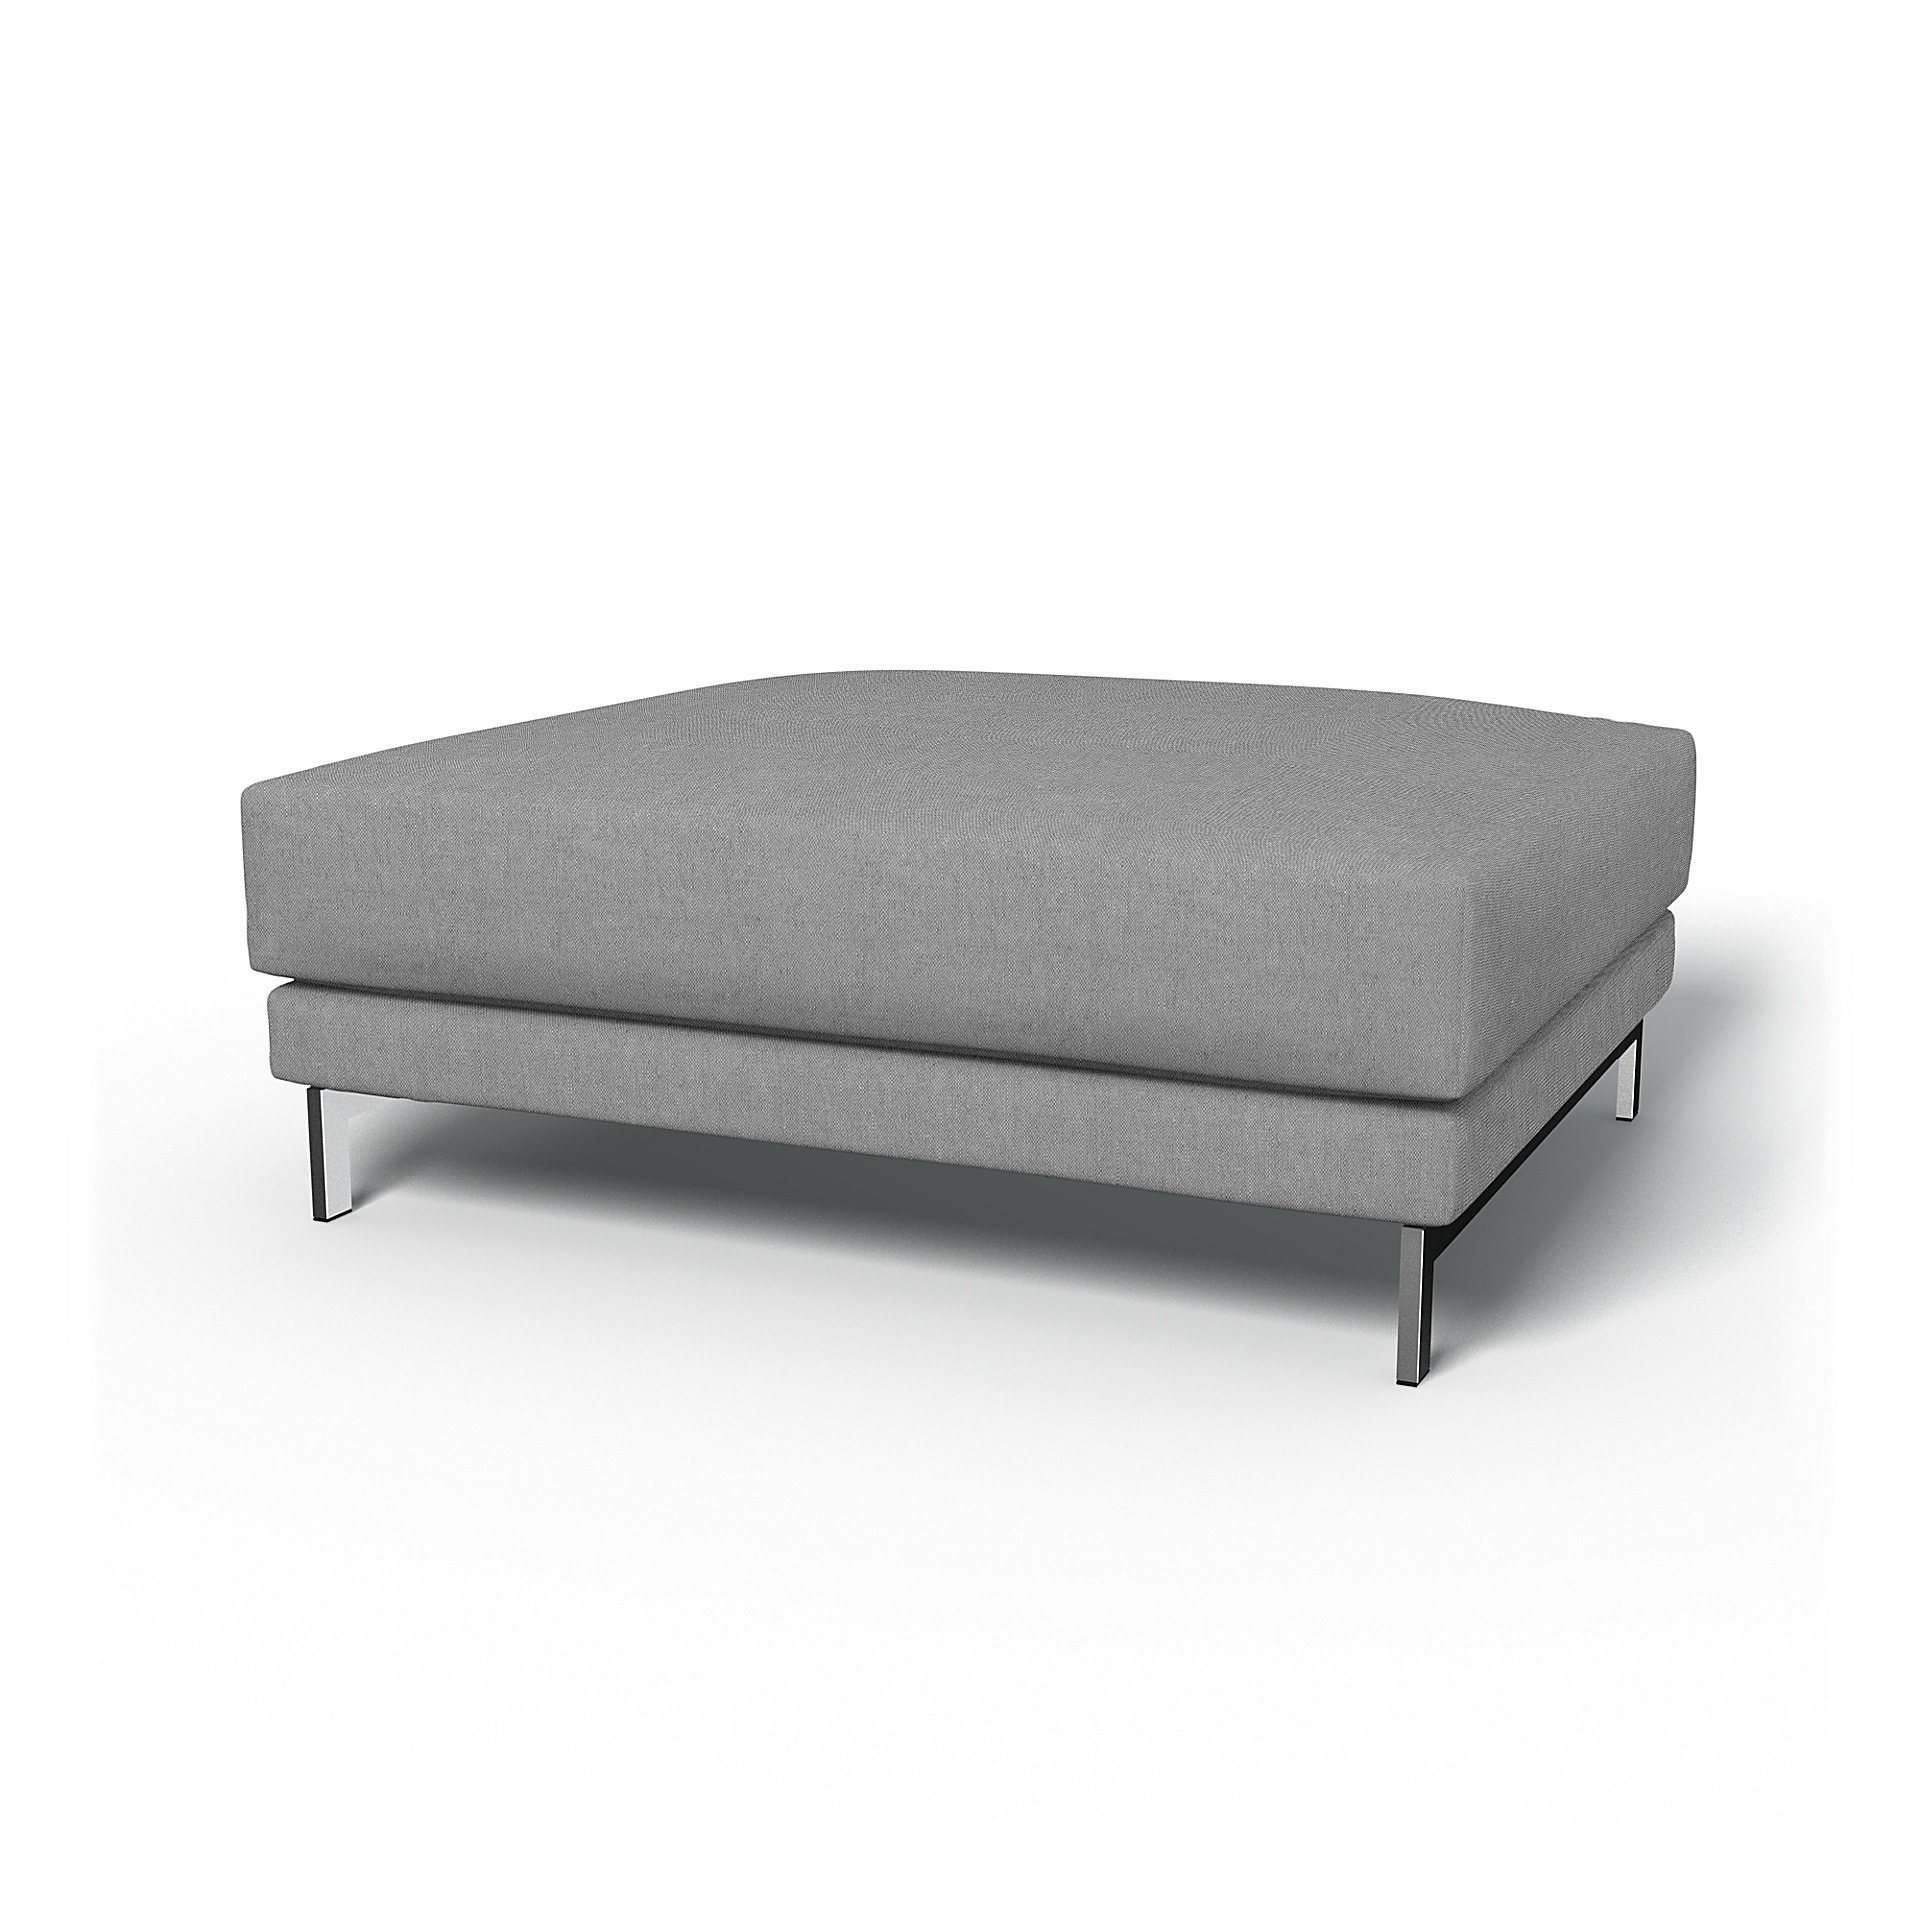 IKEA - Nockeby Footstool Cover, Graphite, Linen - Bemz